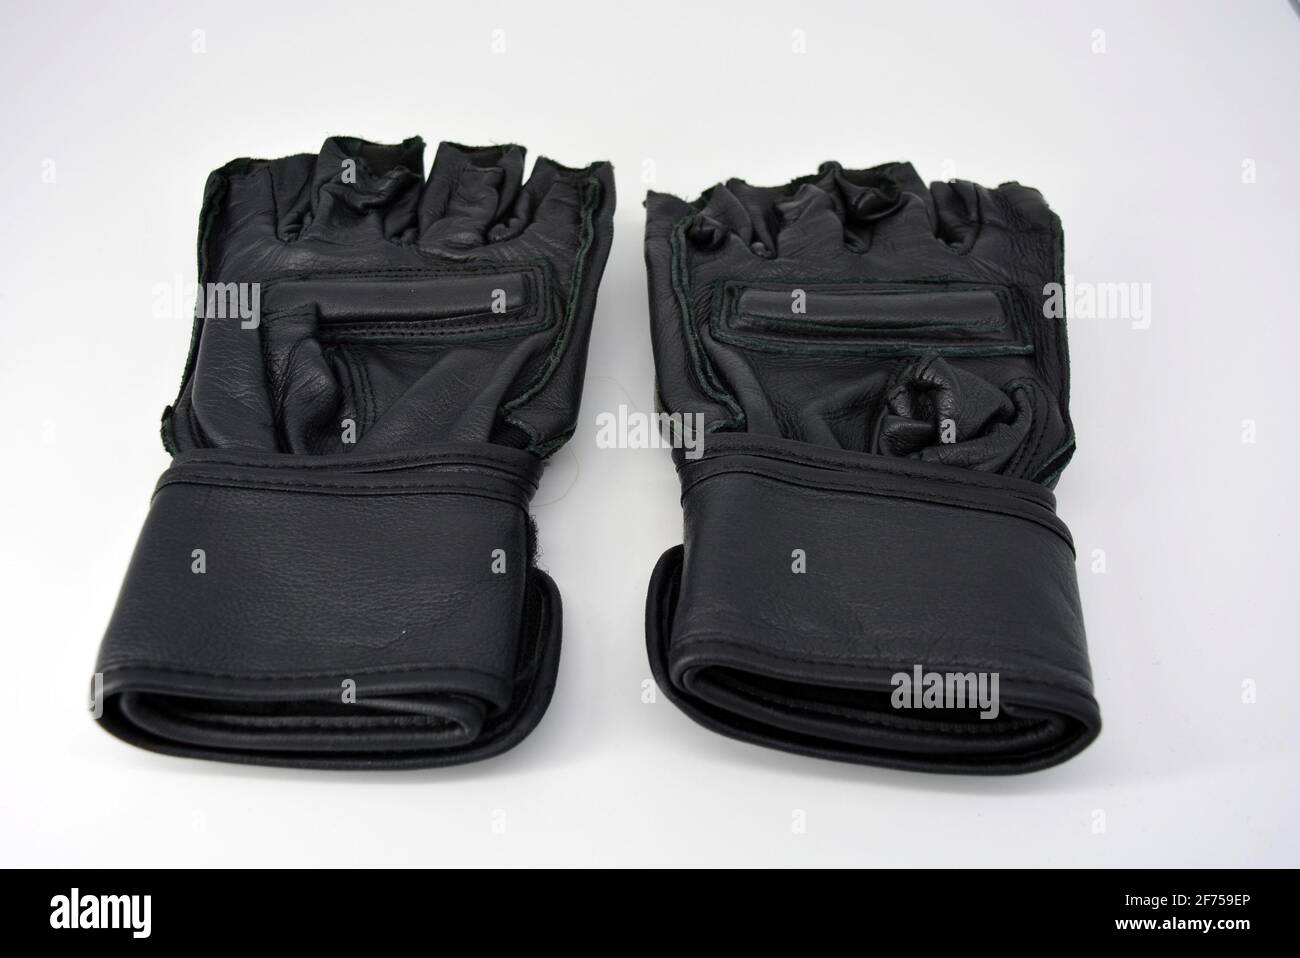 Sportgeräte, Ausrüstung, Sportgeräte, Boxen, Karate. Stilvolle schöne  modische schwarze Boxhandschuhe aus echtem Leder Stockfotografie - Alamy